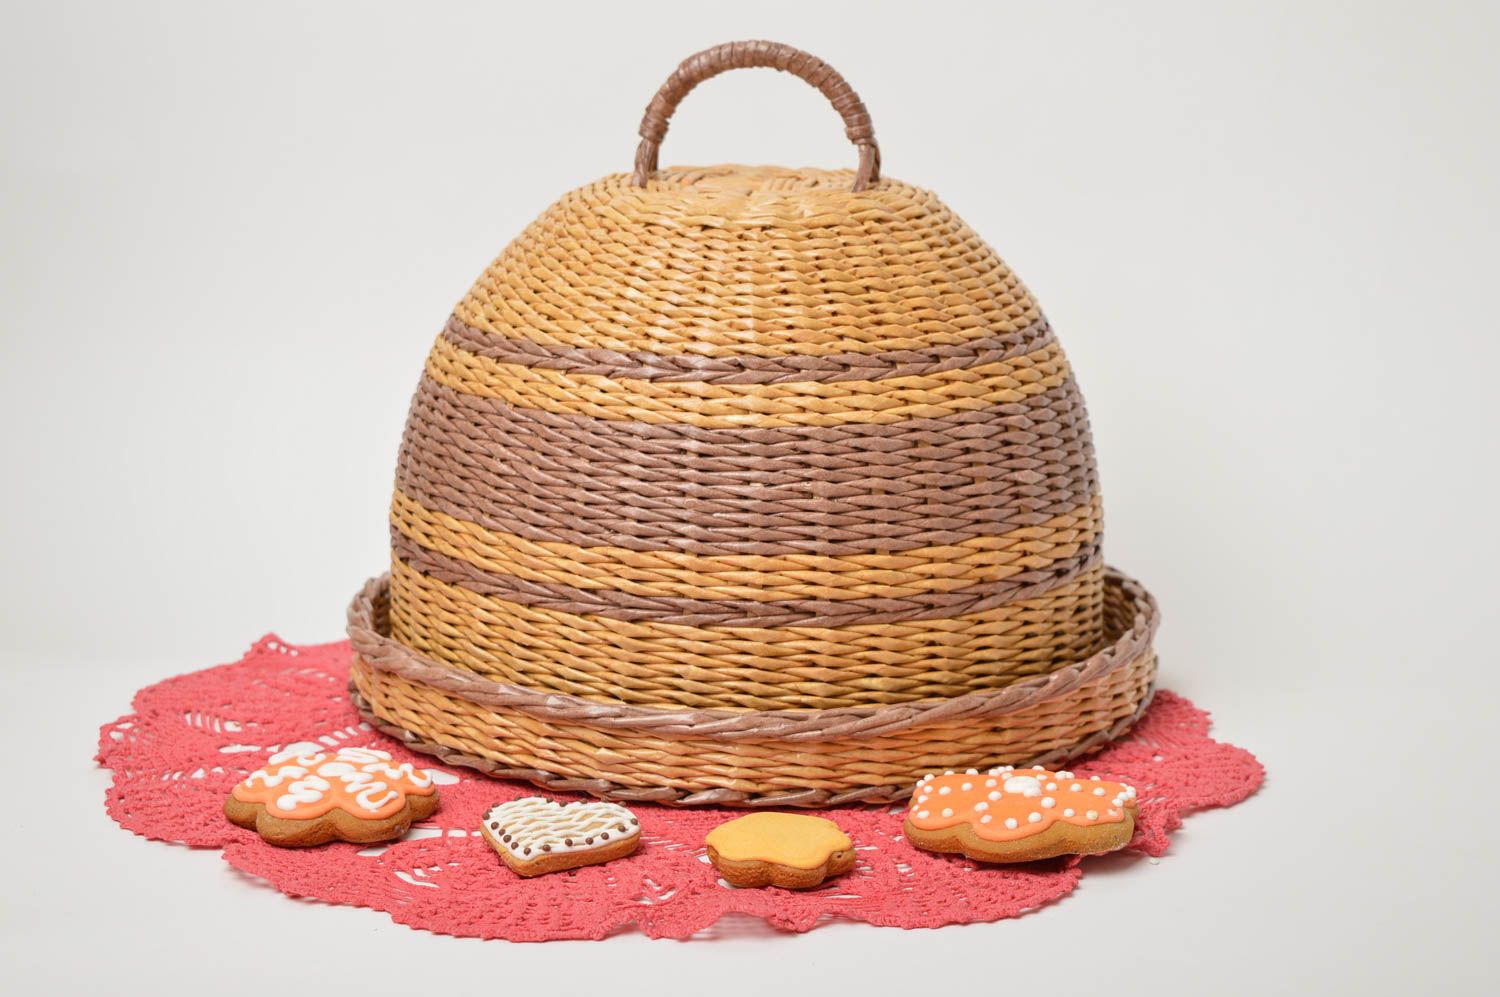 Handmade kitchen basket for bread wicker basket for kitchen home decor ideas photo 1